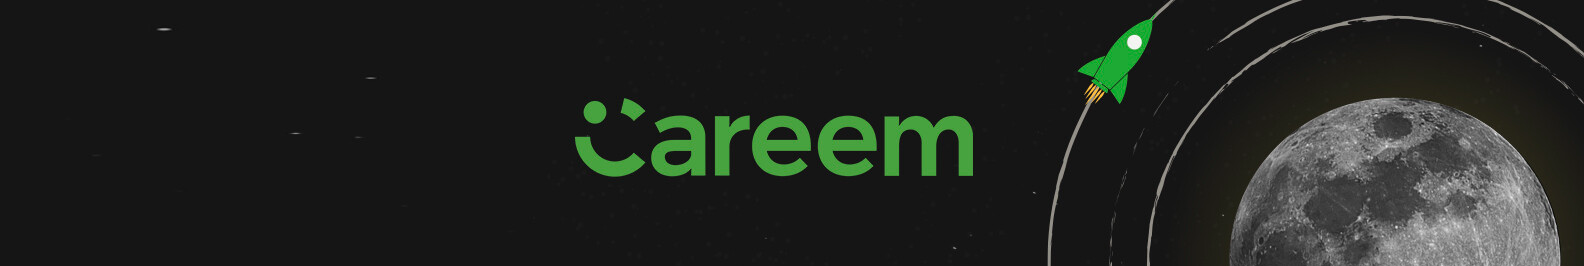 Careem background